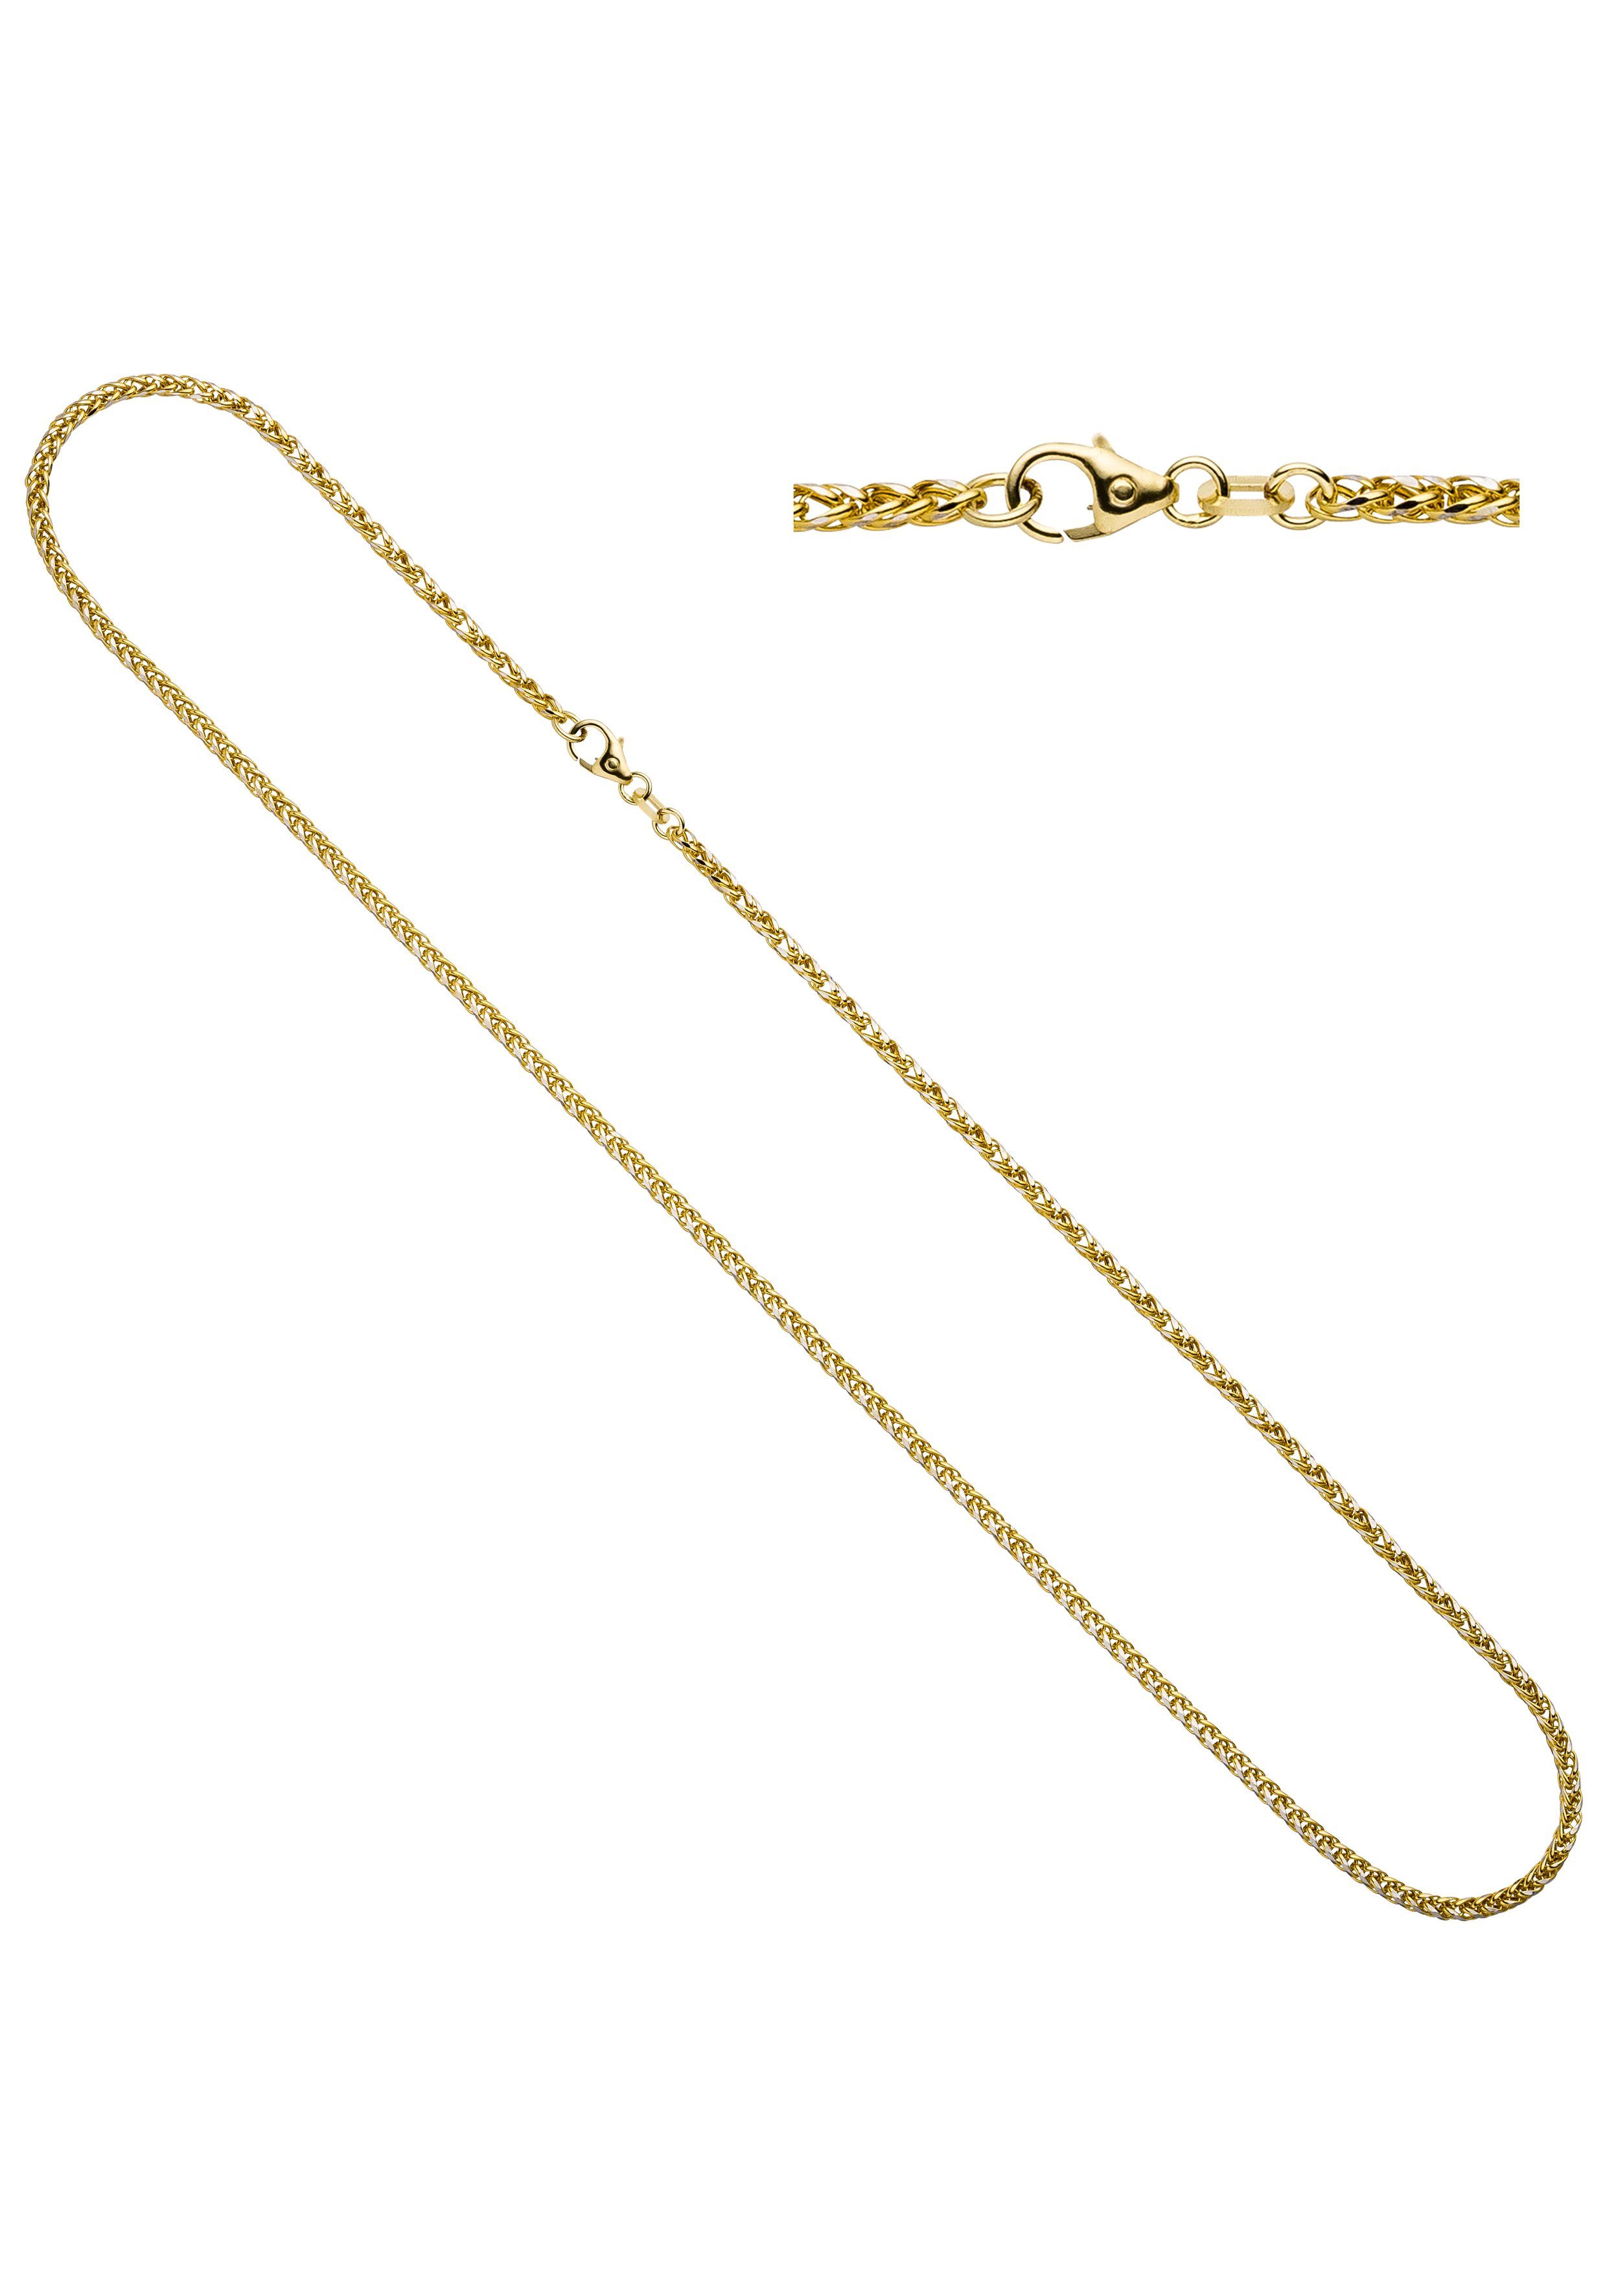 JOBO Goldkette, Zopfkette 585 Gold bicolor 45 cm 1,9 mm